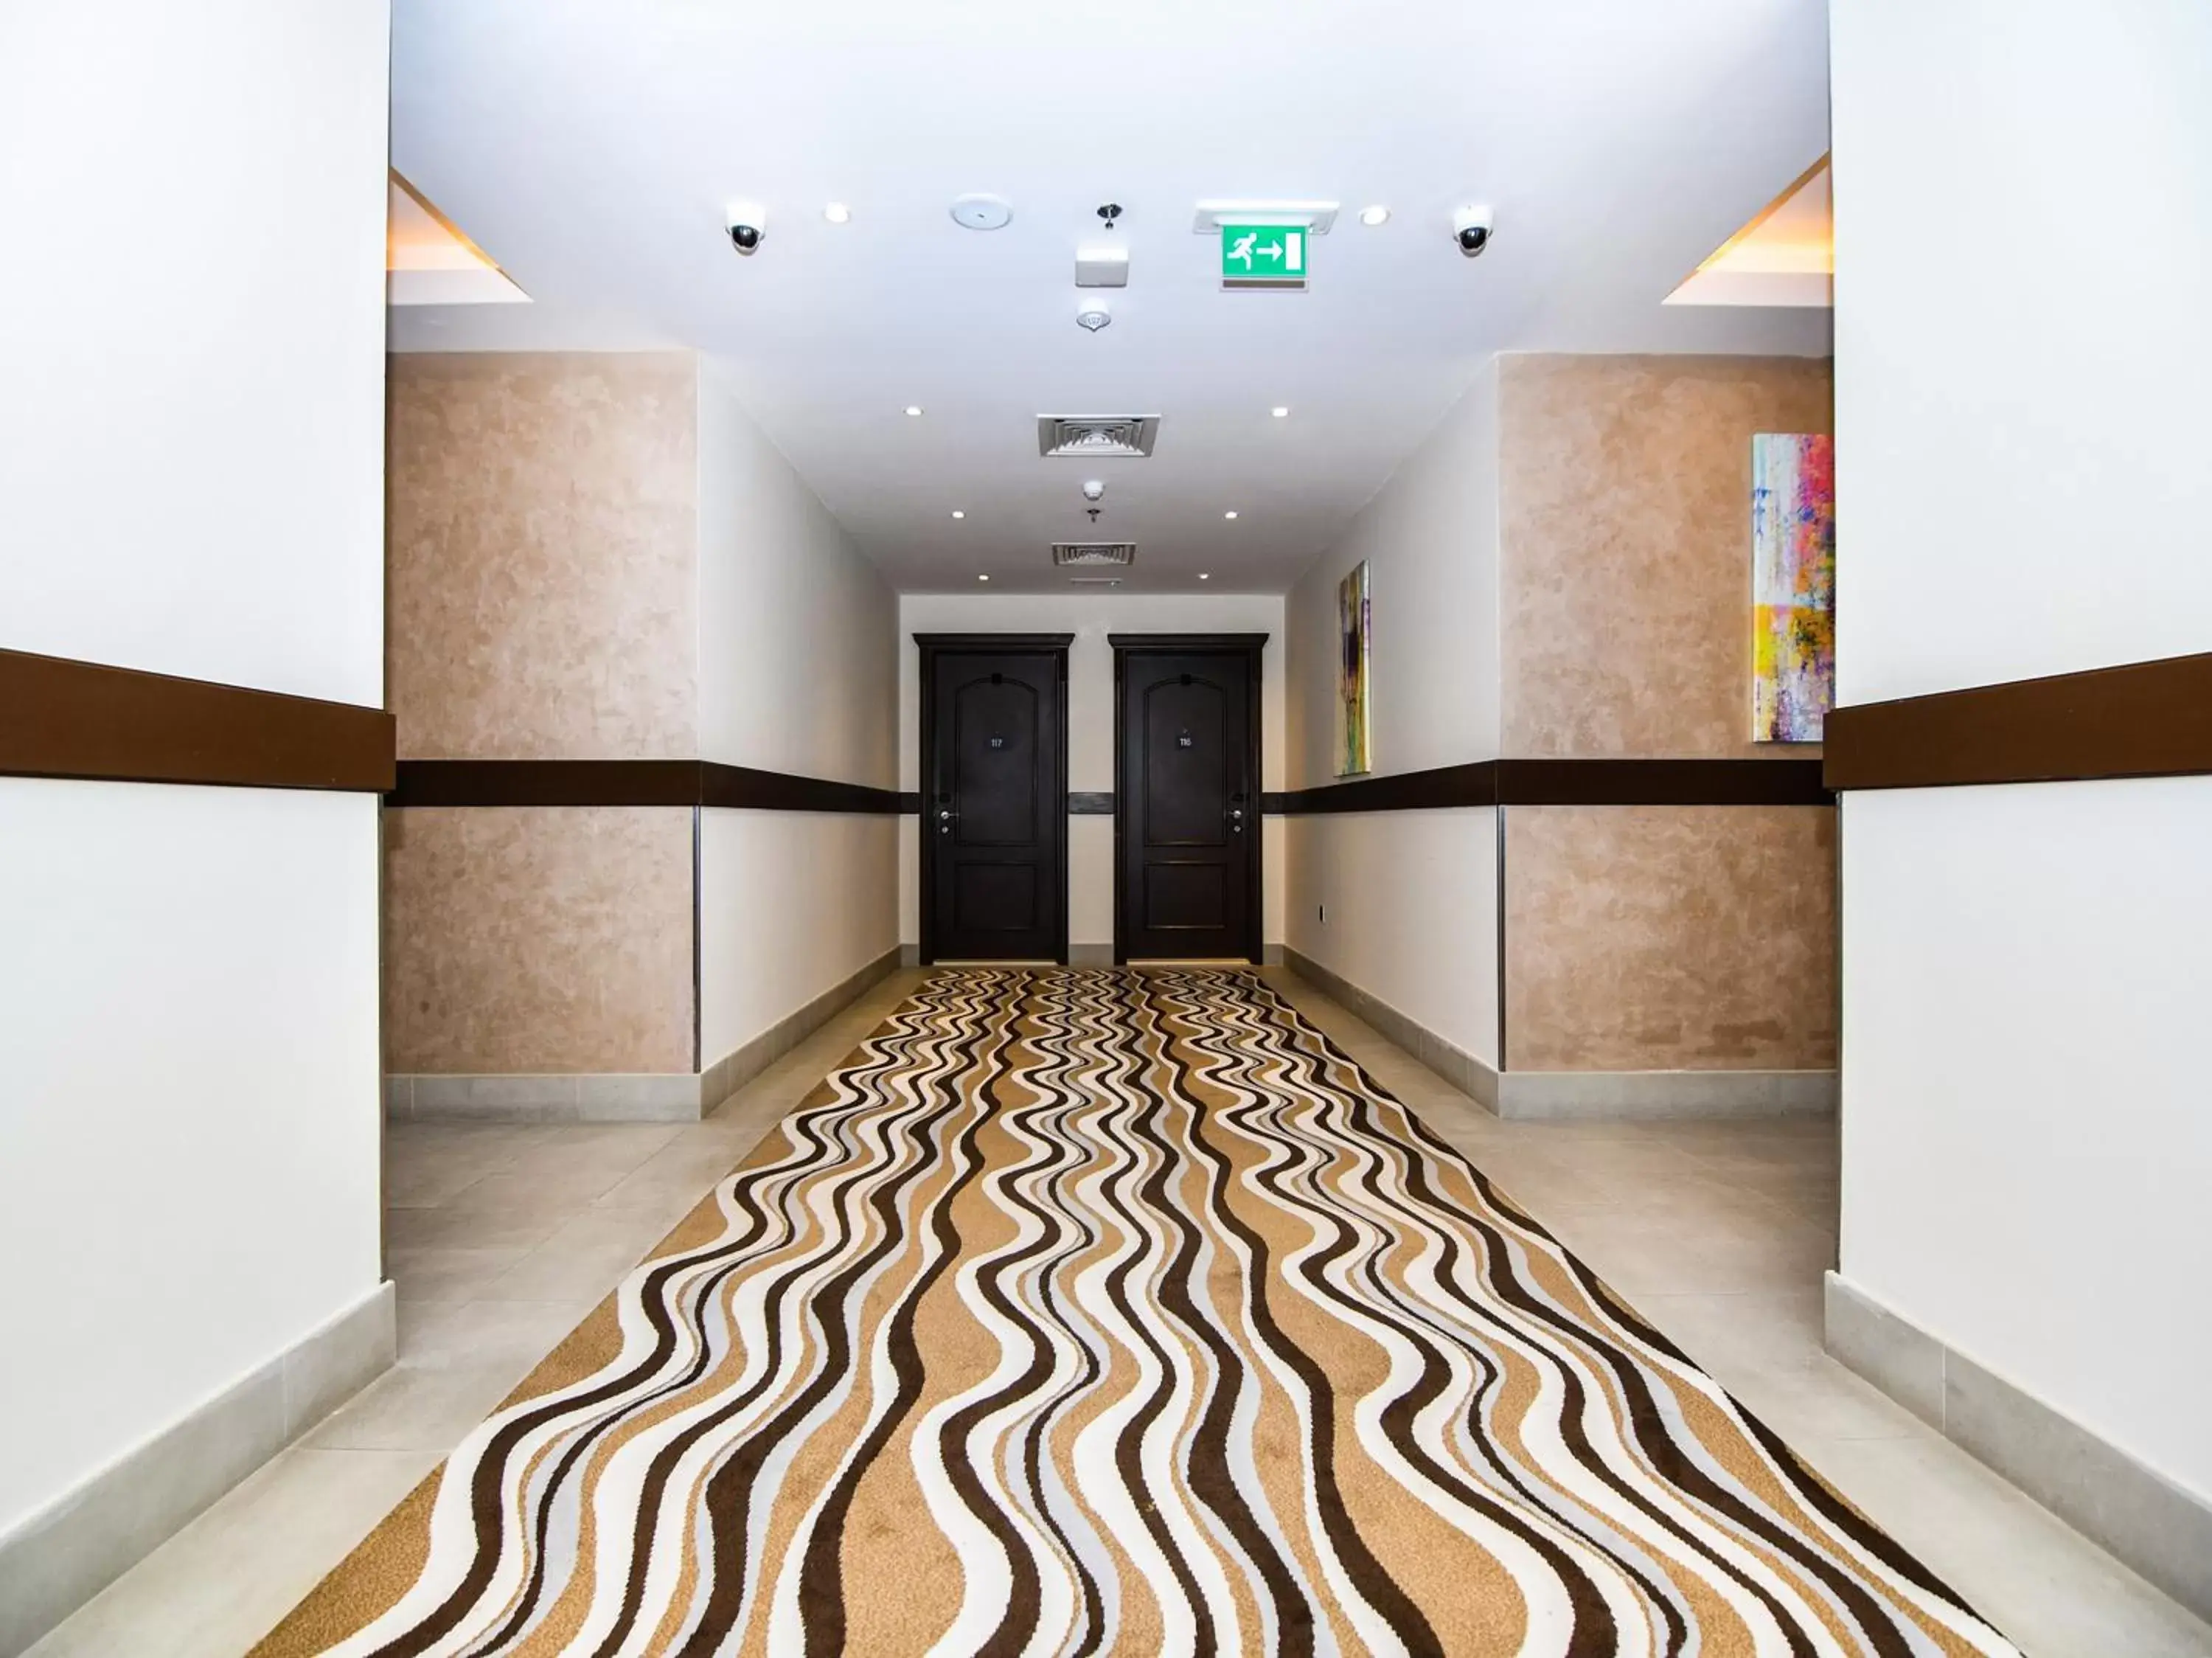 Lobby or reception in Action Hotel Ras Al Khaimah